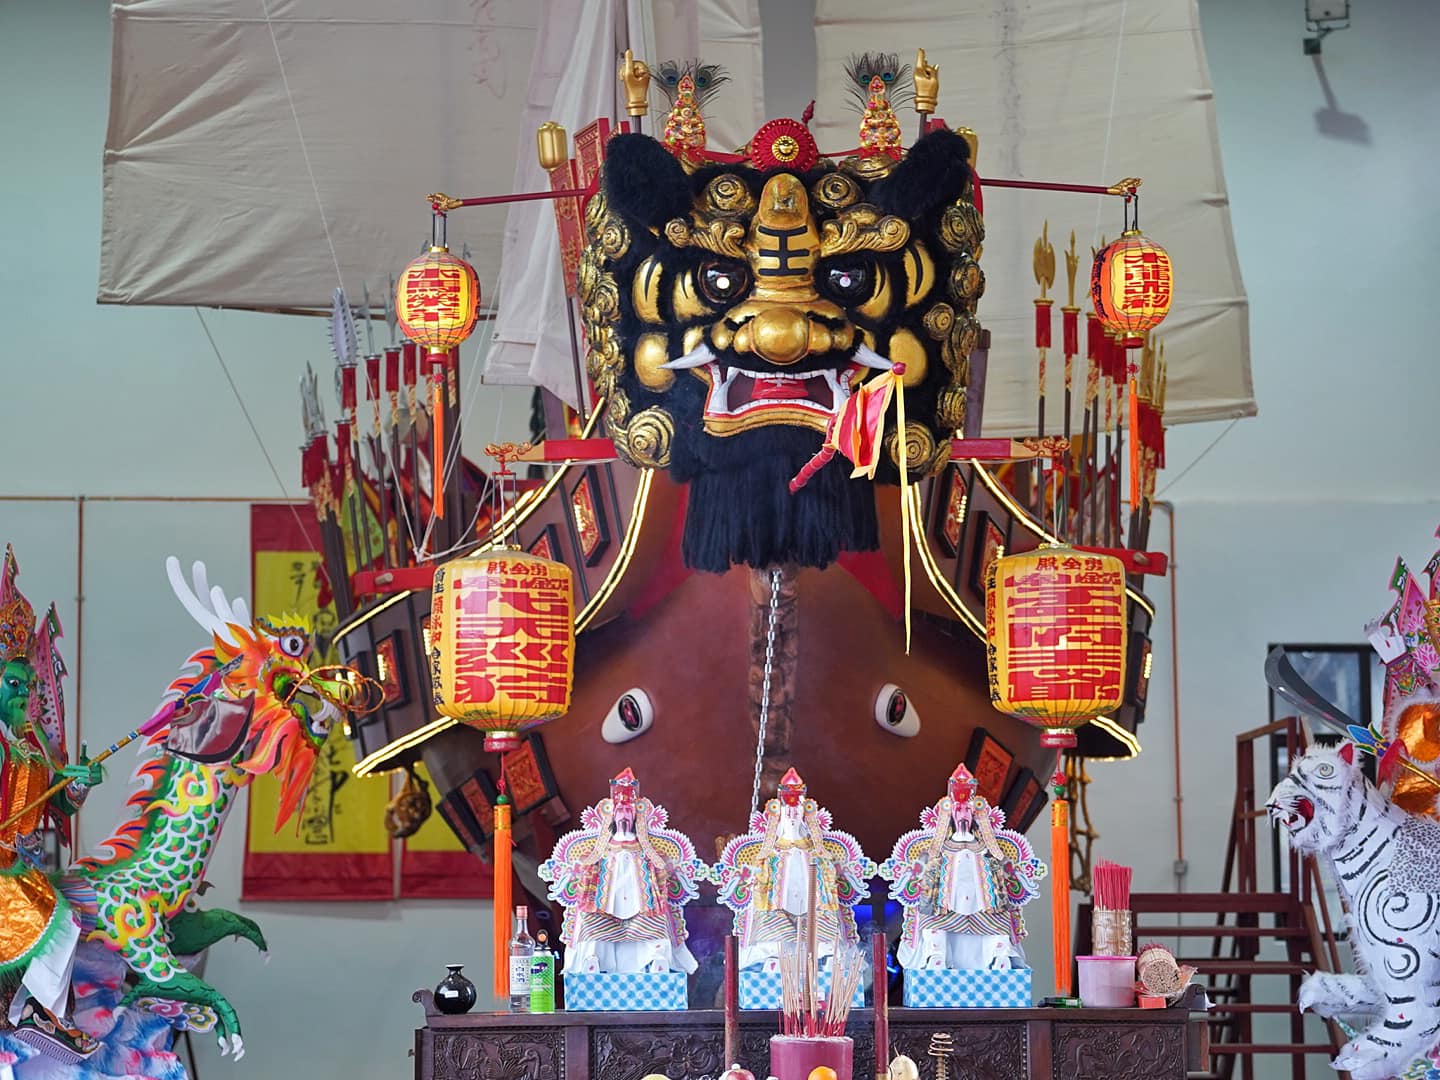 Melaka's Wangkang procession blends tradition & tourism